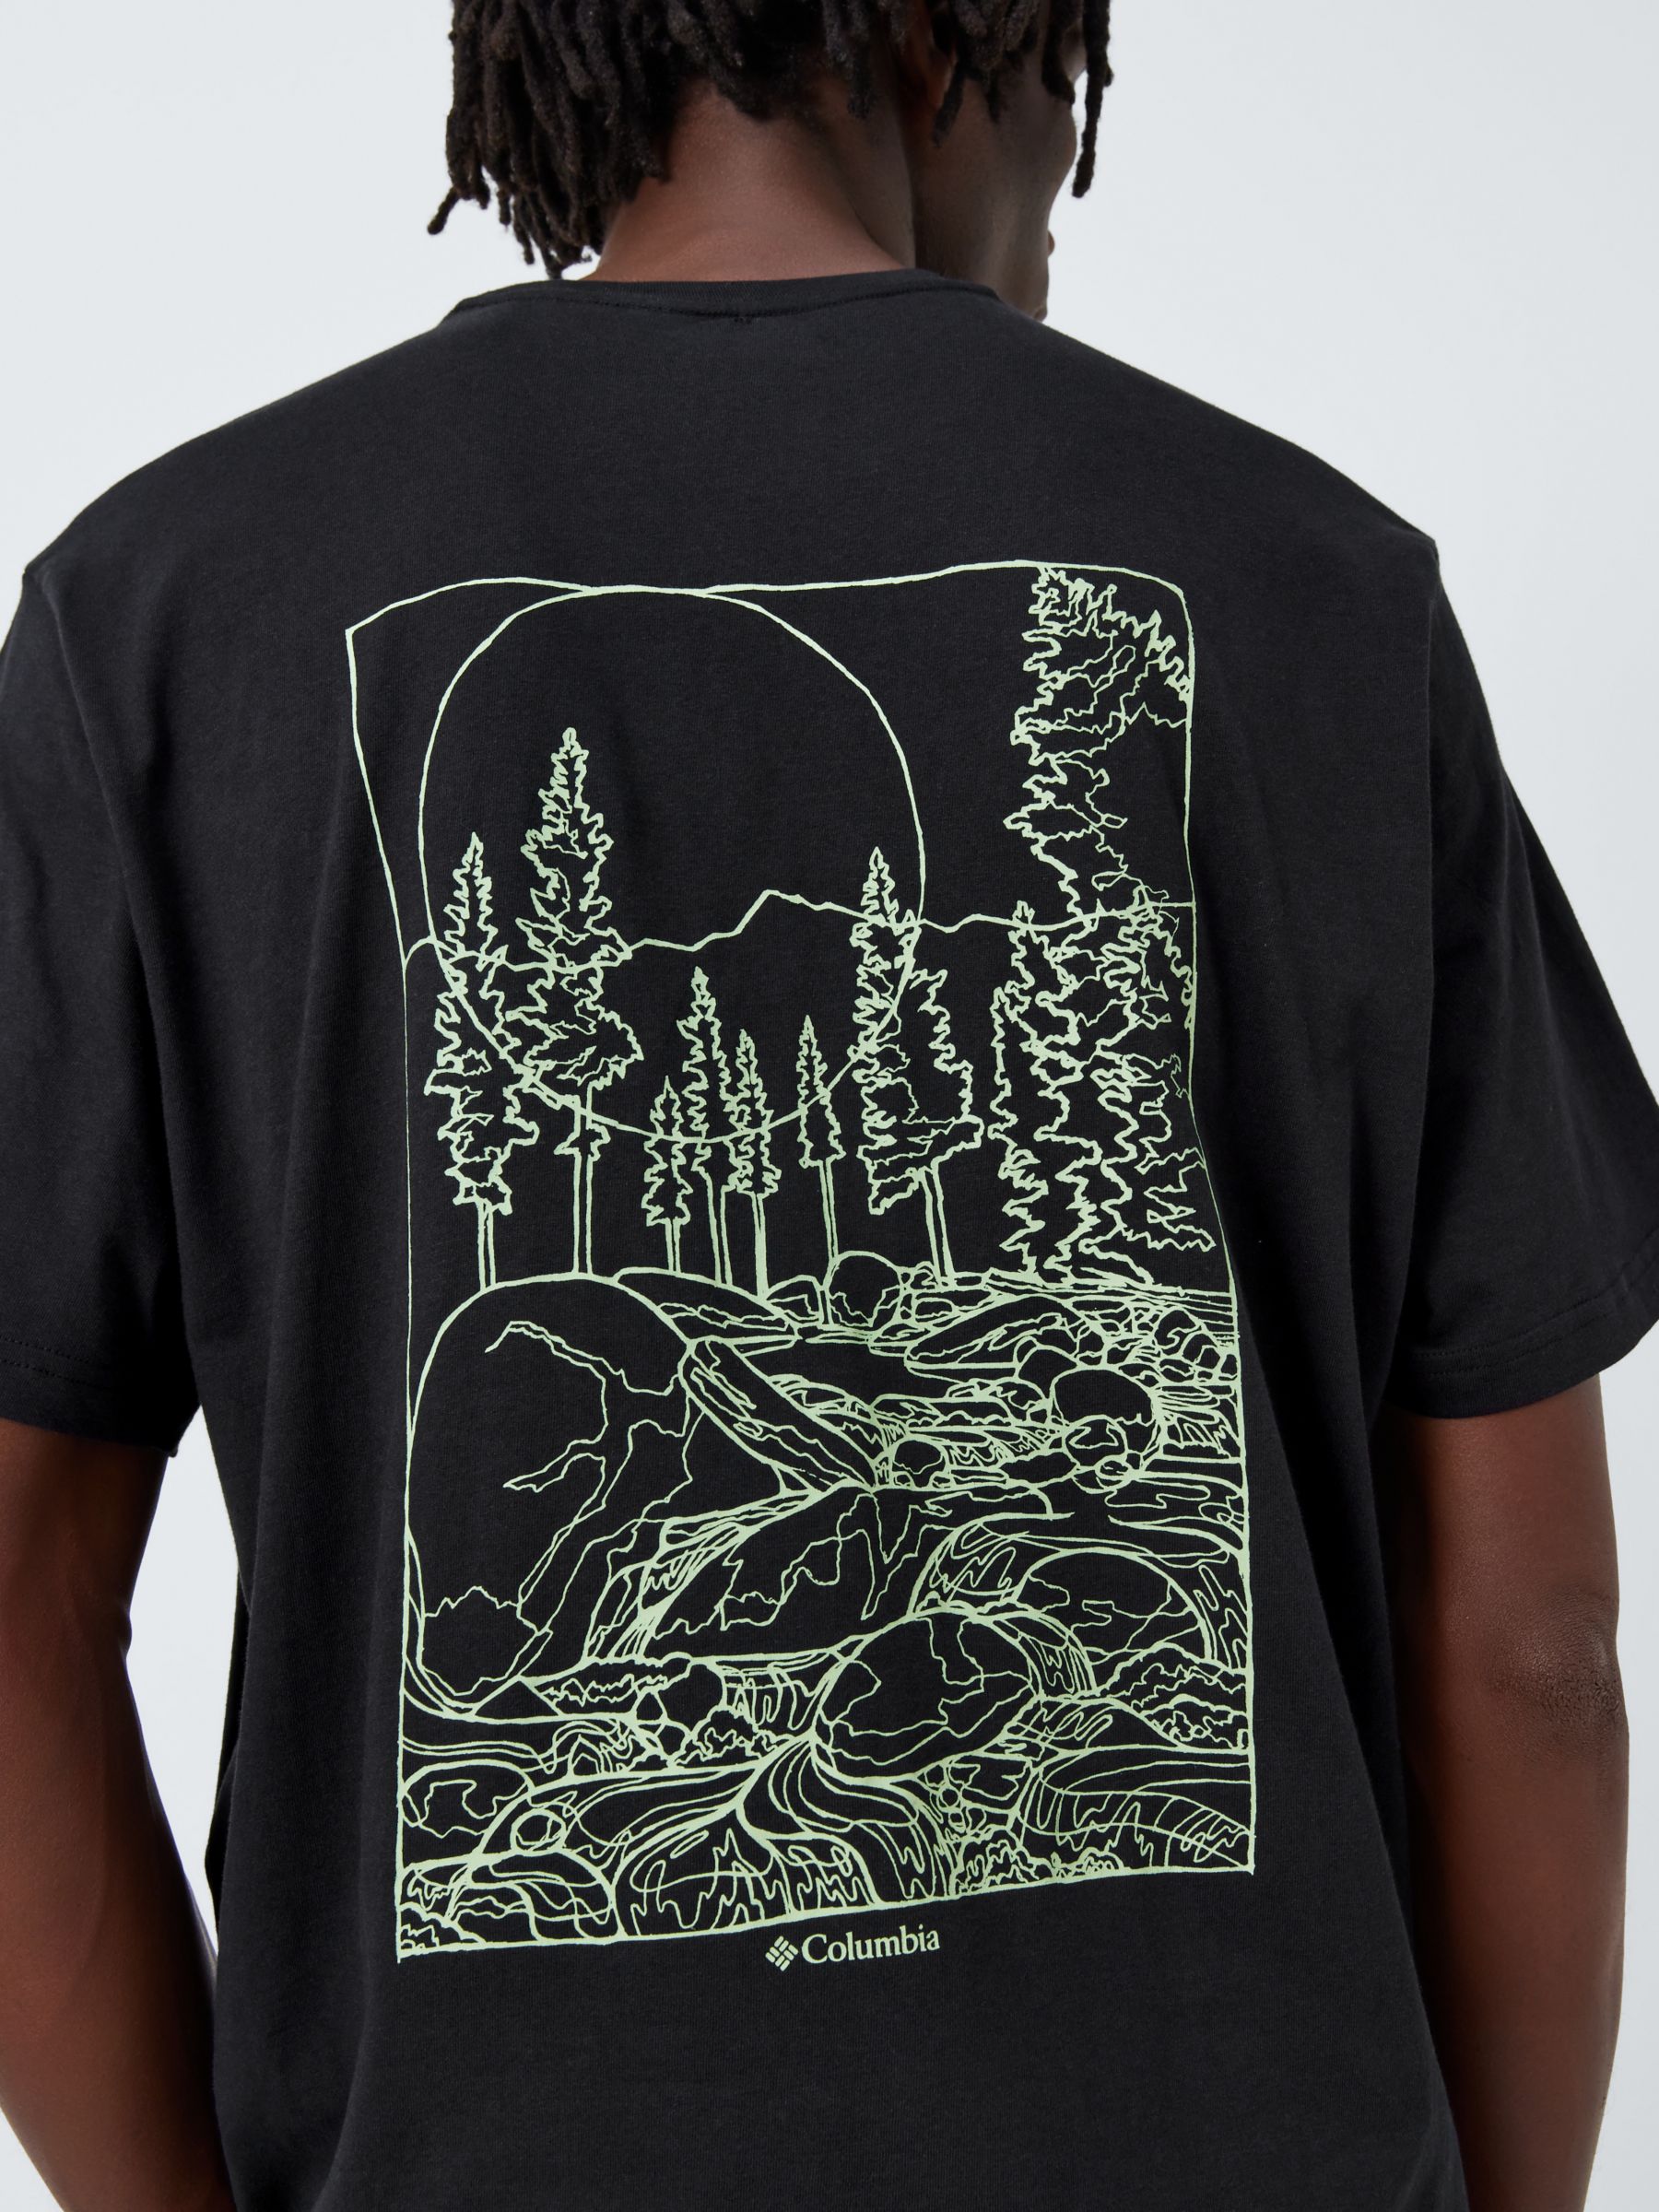 Columbia Rockaway River T-Shirt, Black, XL